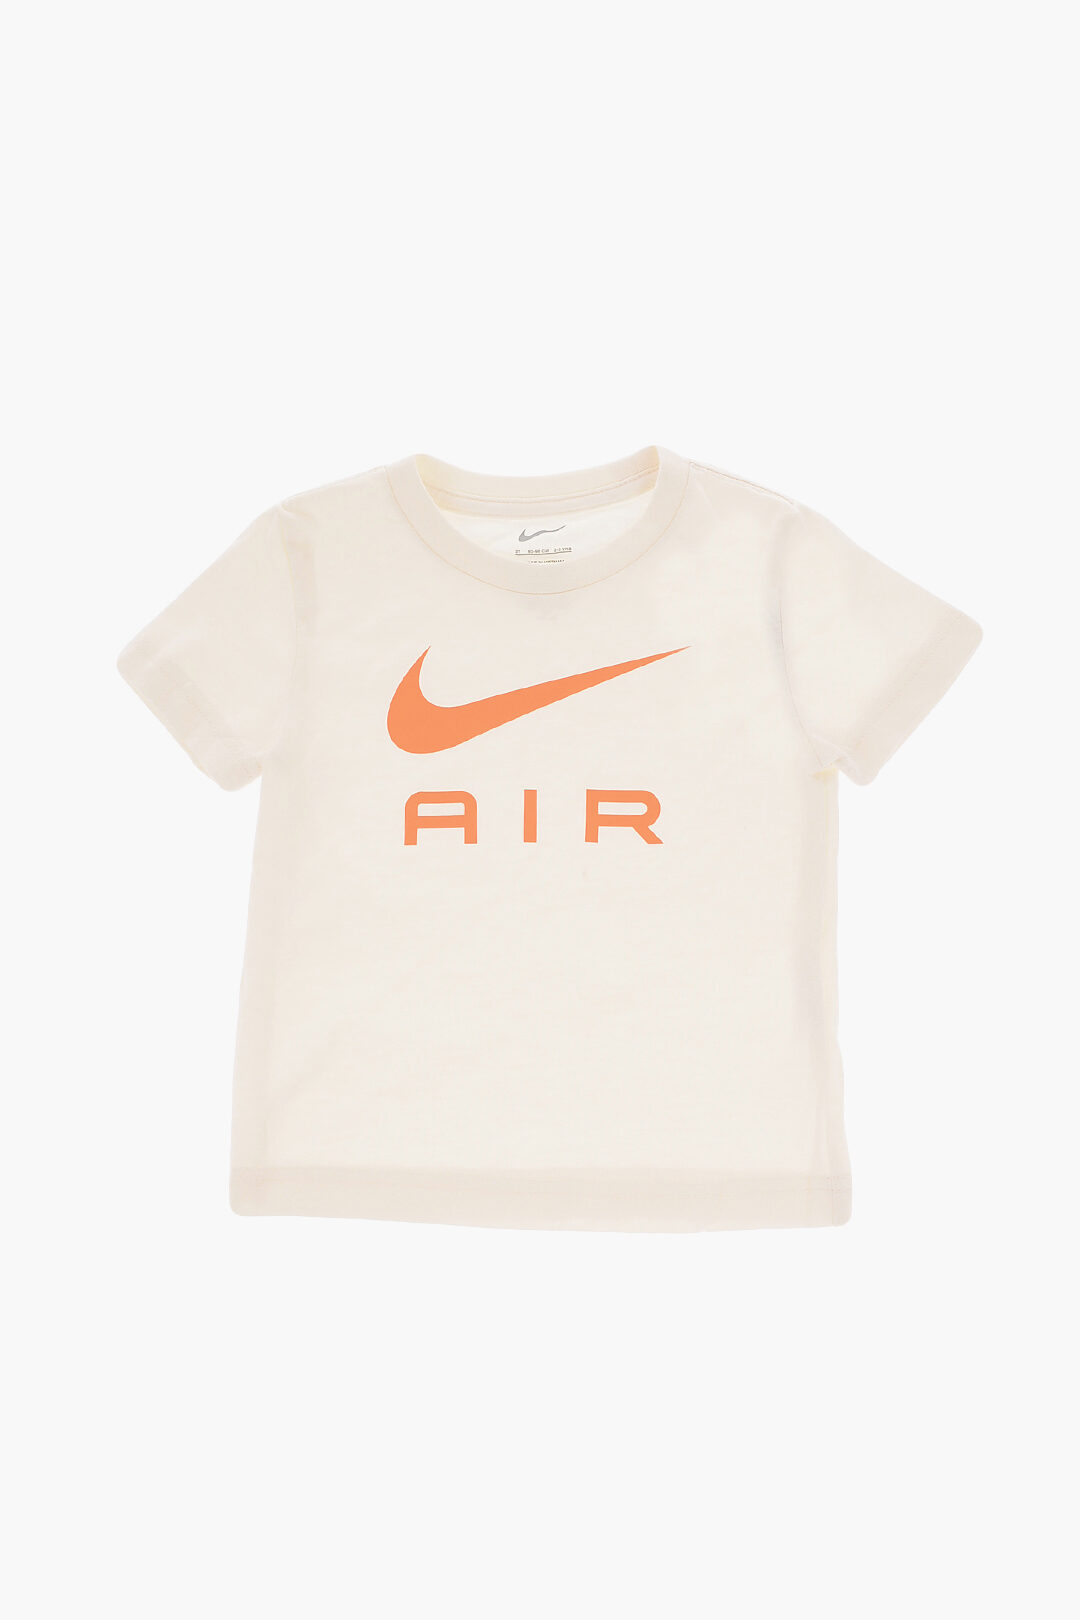 Nike KIDS Fleeced-Cotton Shorts and Crew-Neck T-shirt Set boys - Glamood  Outlet